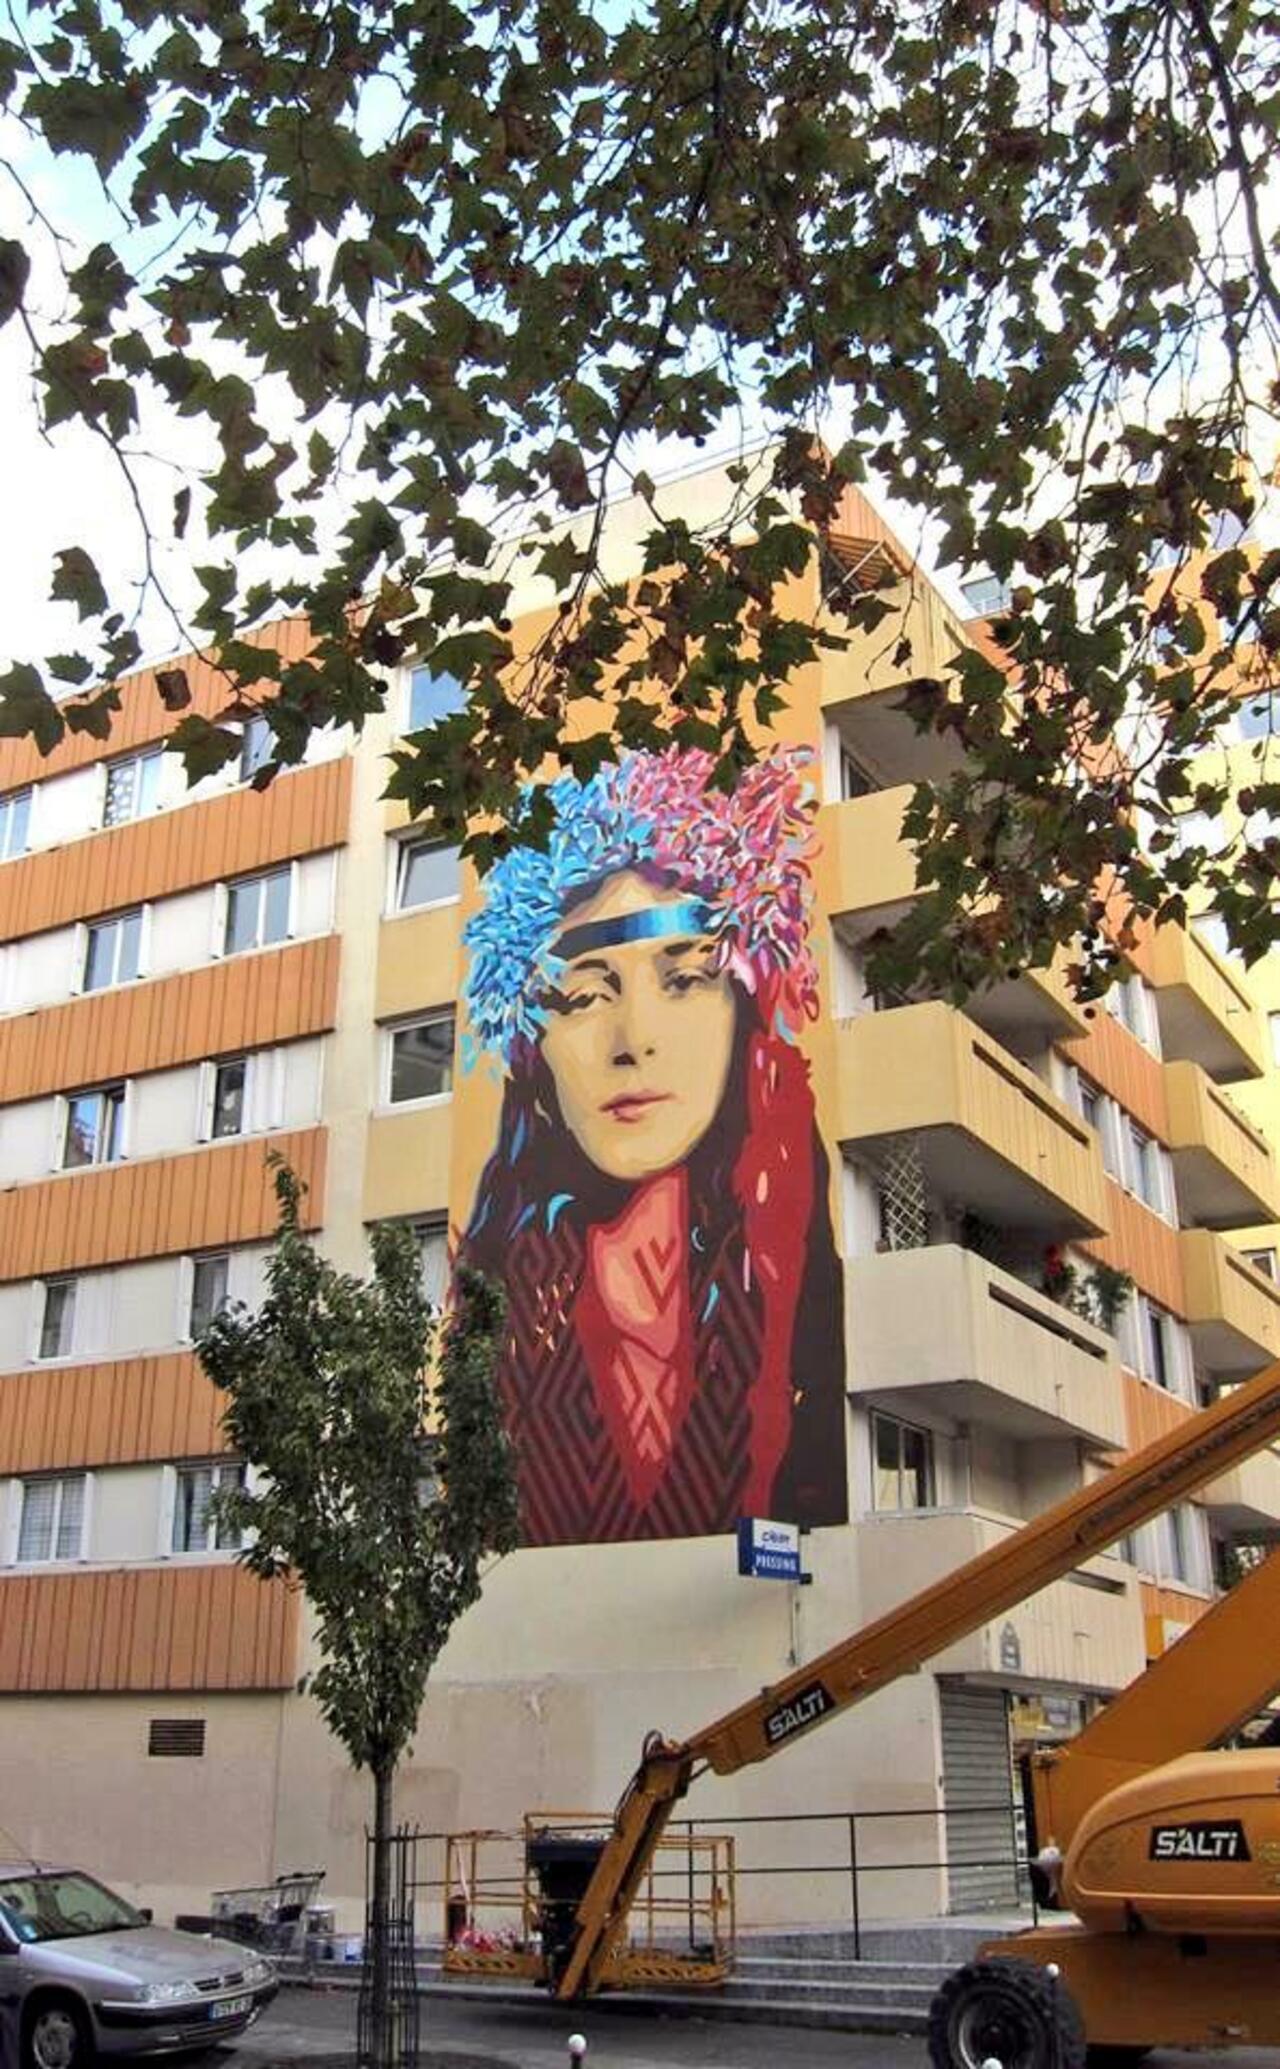 BTOY 
Paris
#Streetart #art #graffiti #mural http://t.co/Xtgn5Aj2Nr